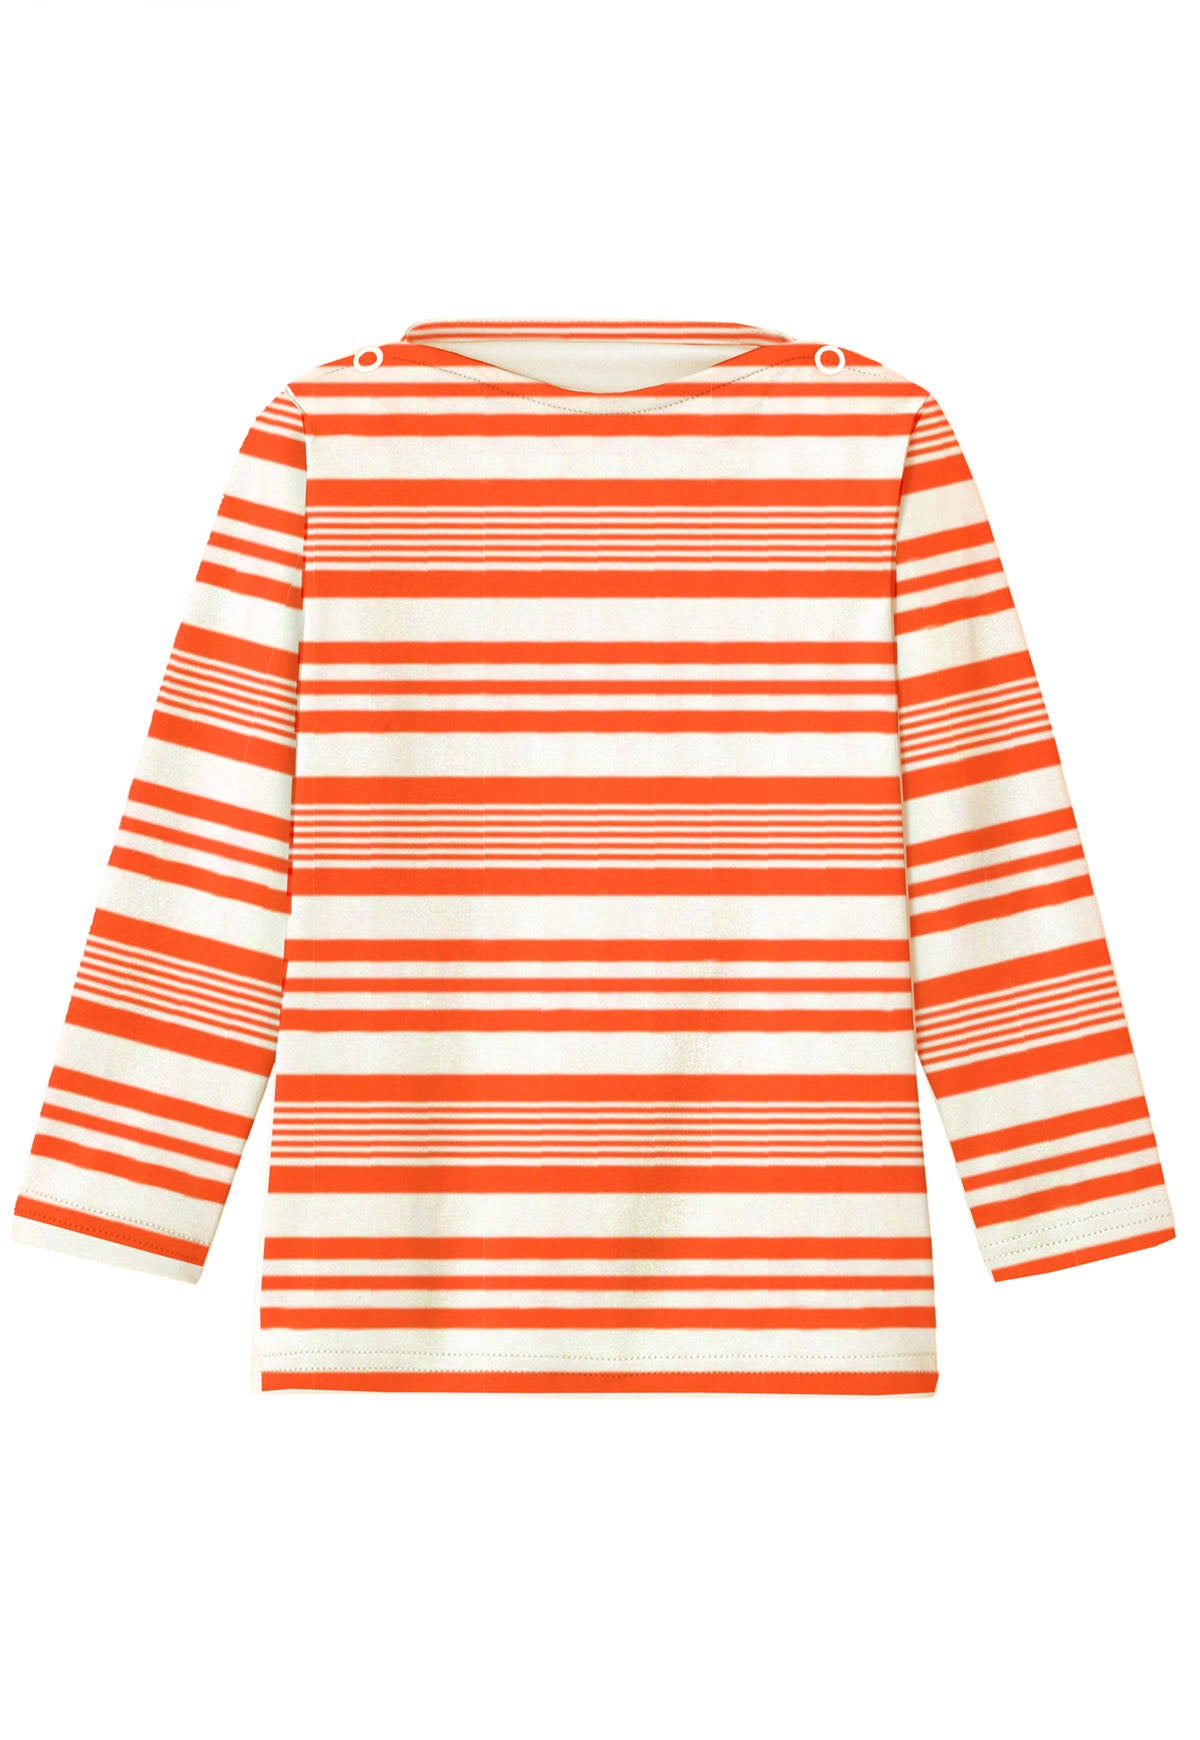 Boys' anti-UV t-shirt, orange striped | MALO T-SHIRT